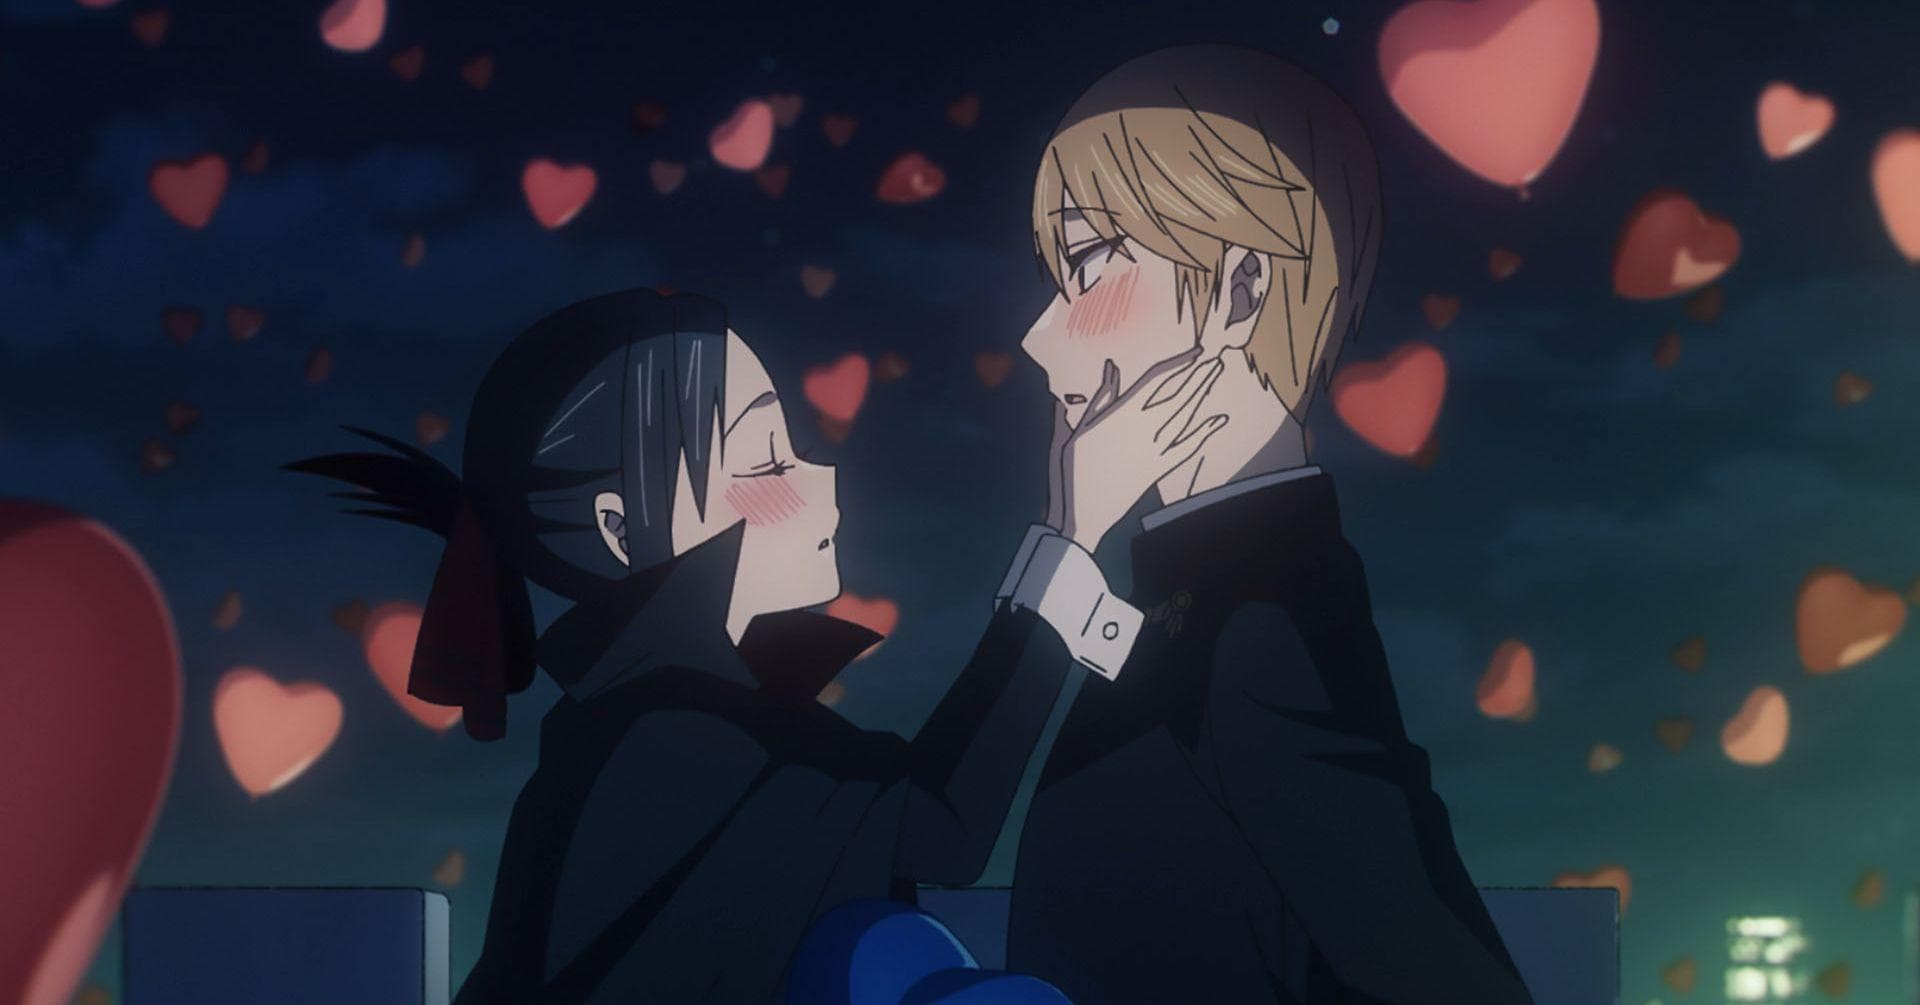 Bite-sized romance: 6 short romance anime for love on the go